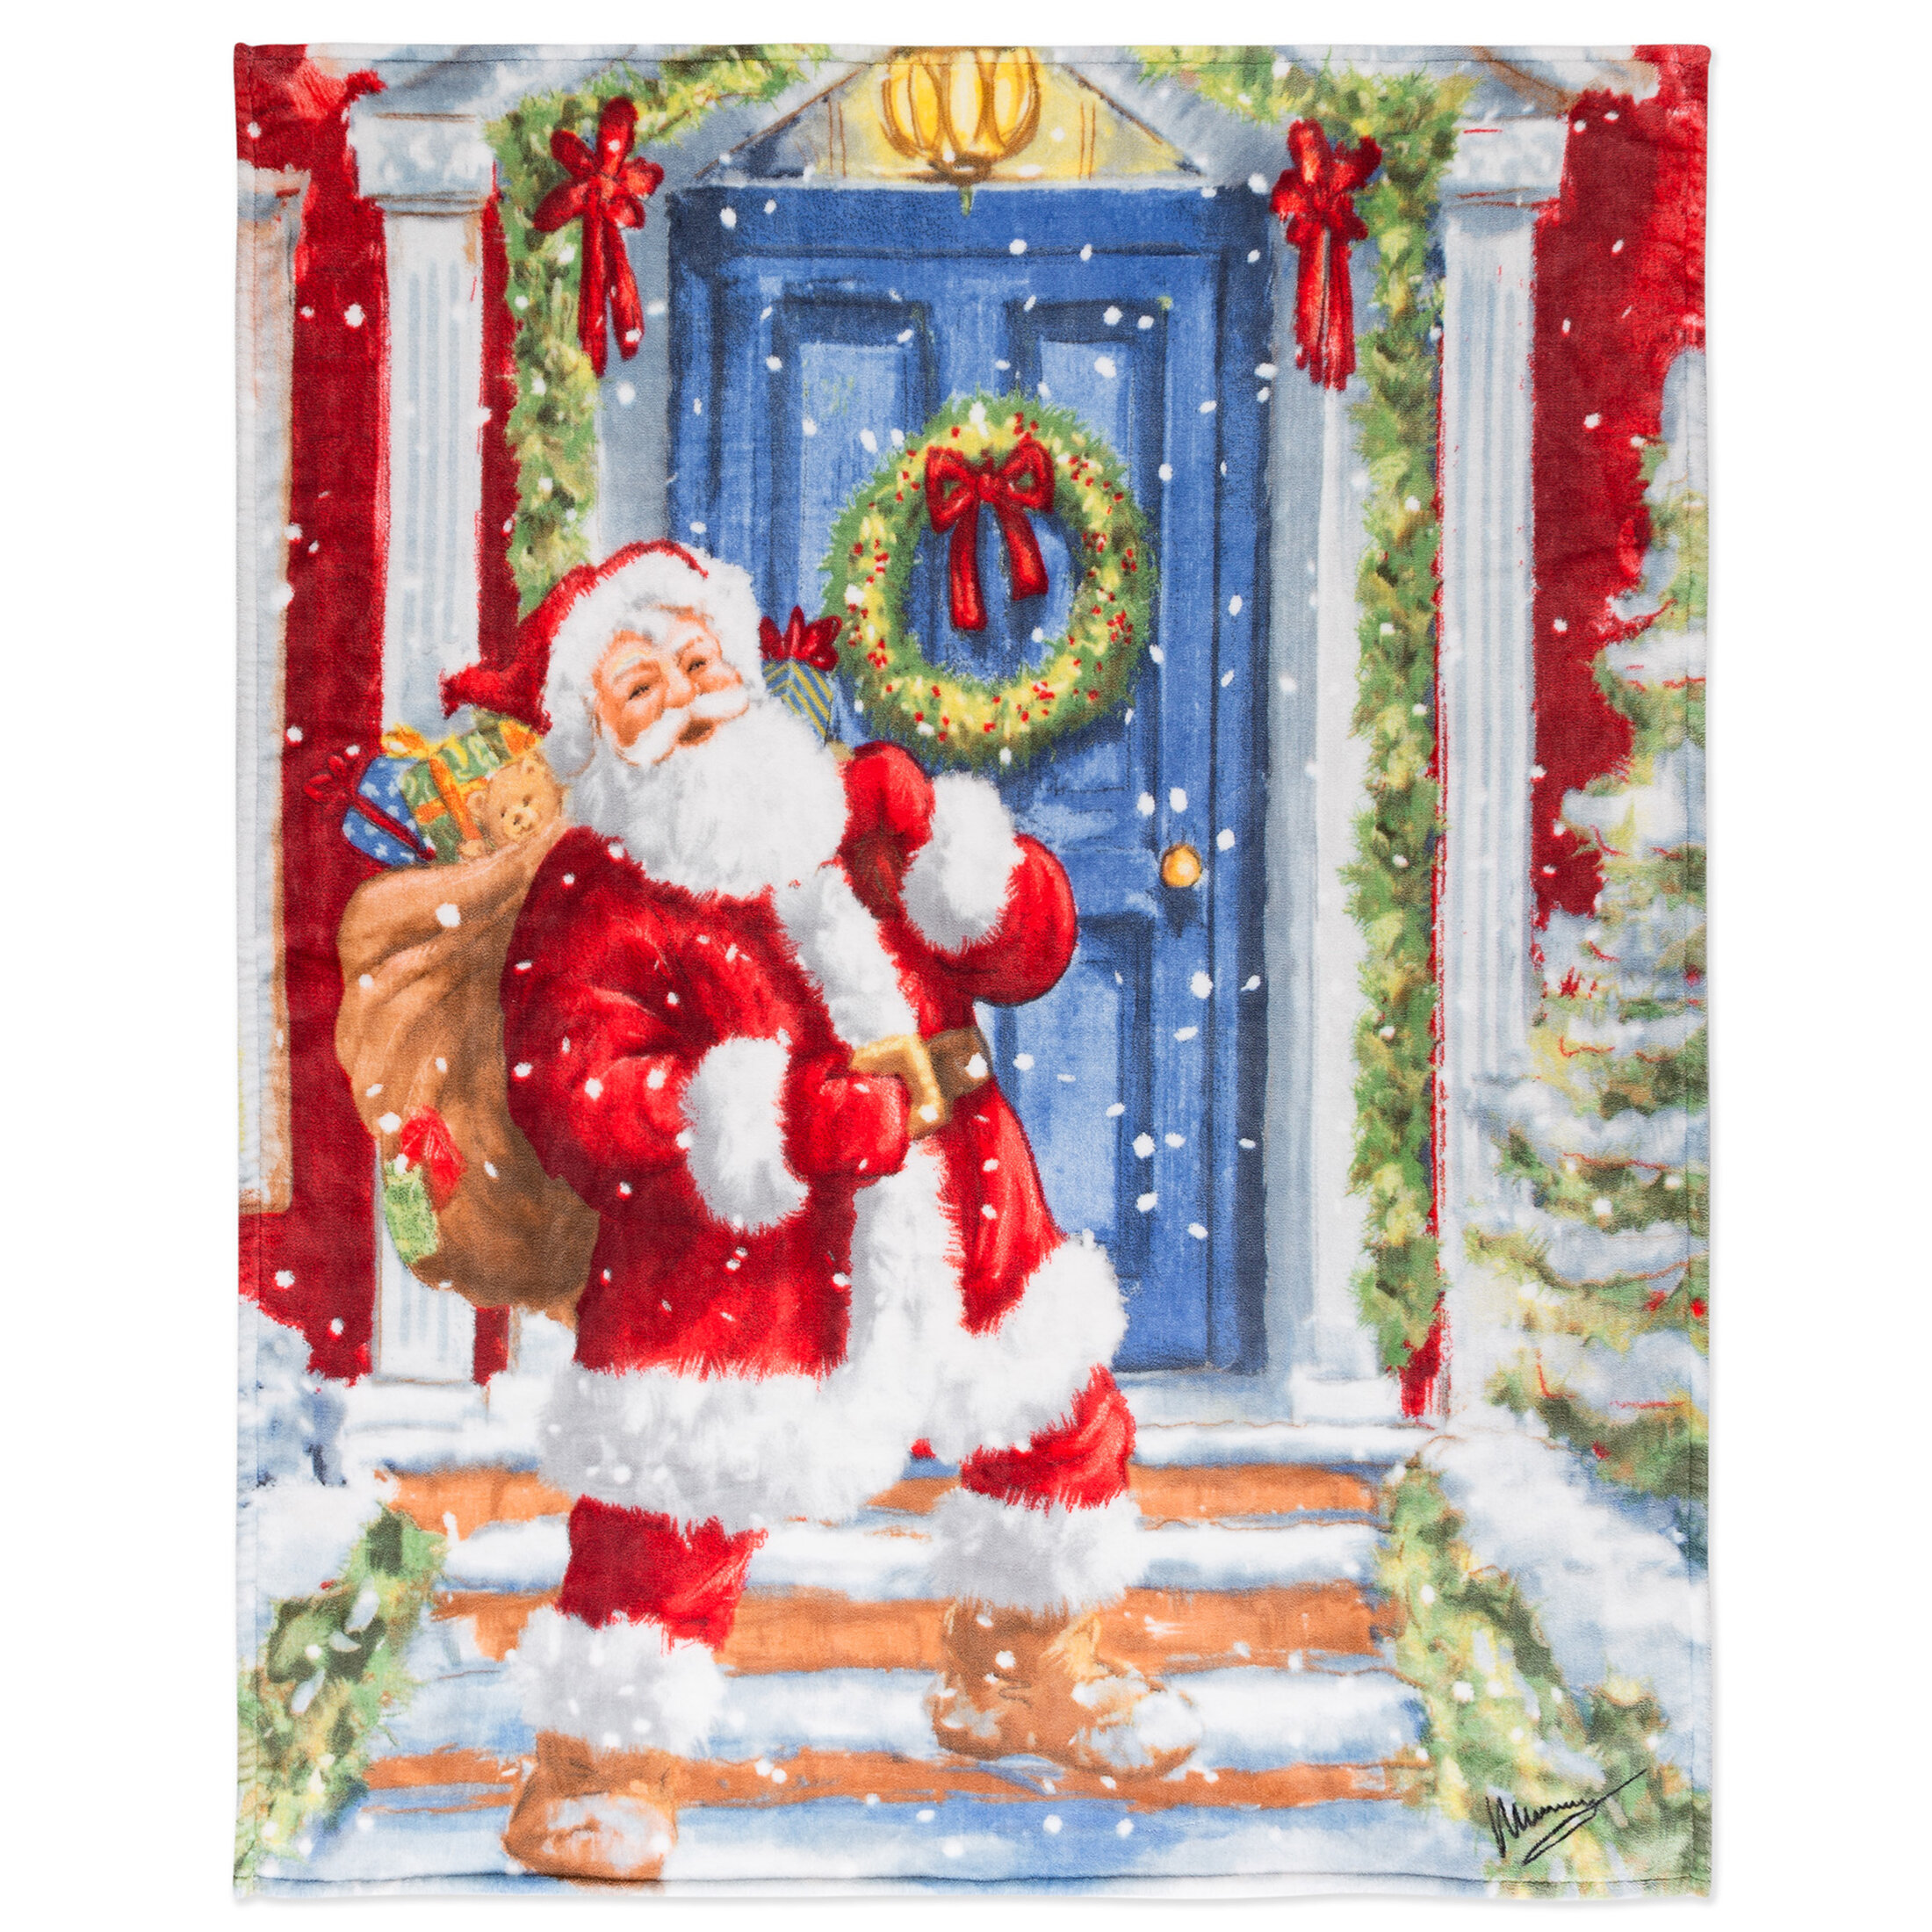 Ultra Soft /& Cozy Oversized Christmas Santa /& Snowman Plush Throw Blanket Cover